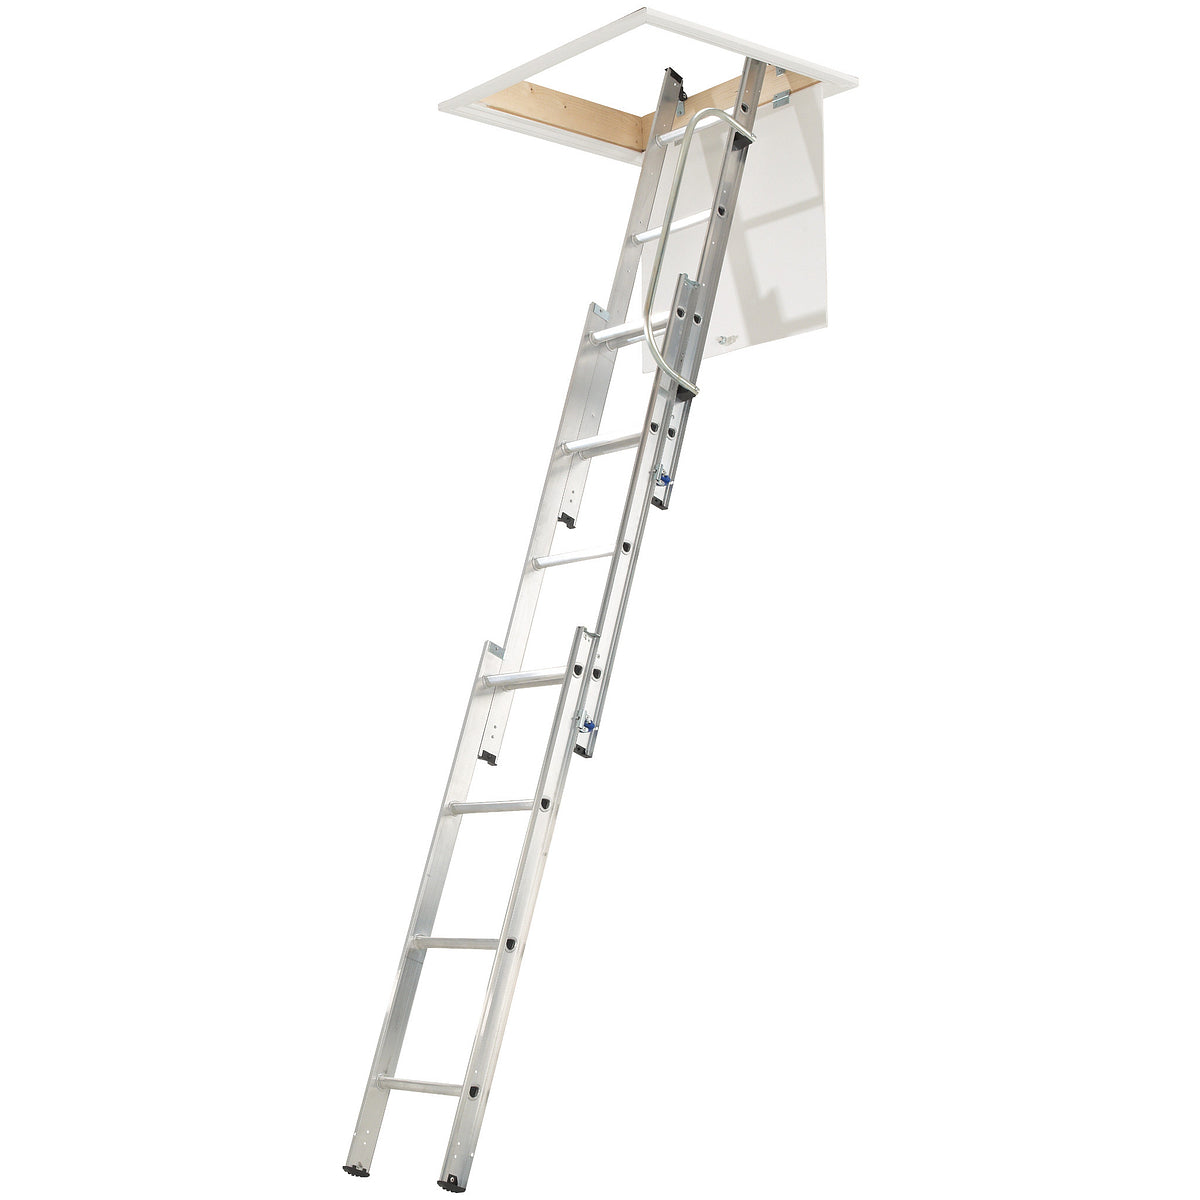 Werner 3 Section Aluminium Loft Ladder with Handrail